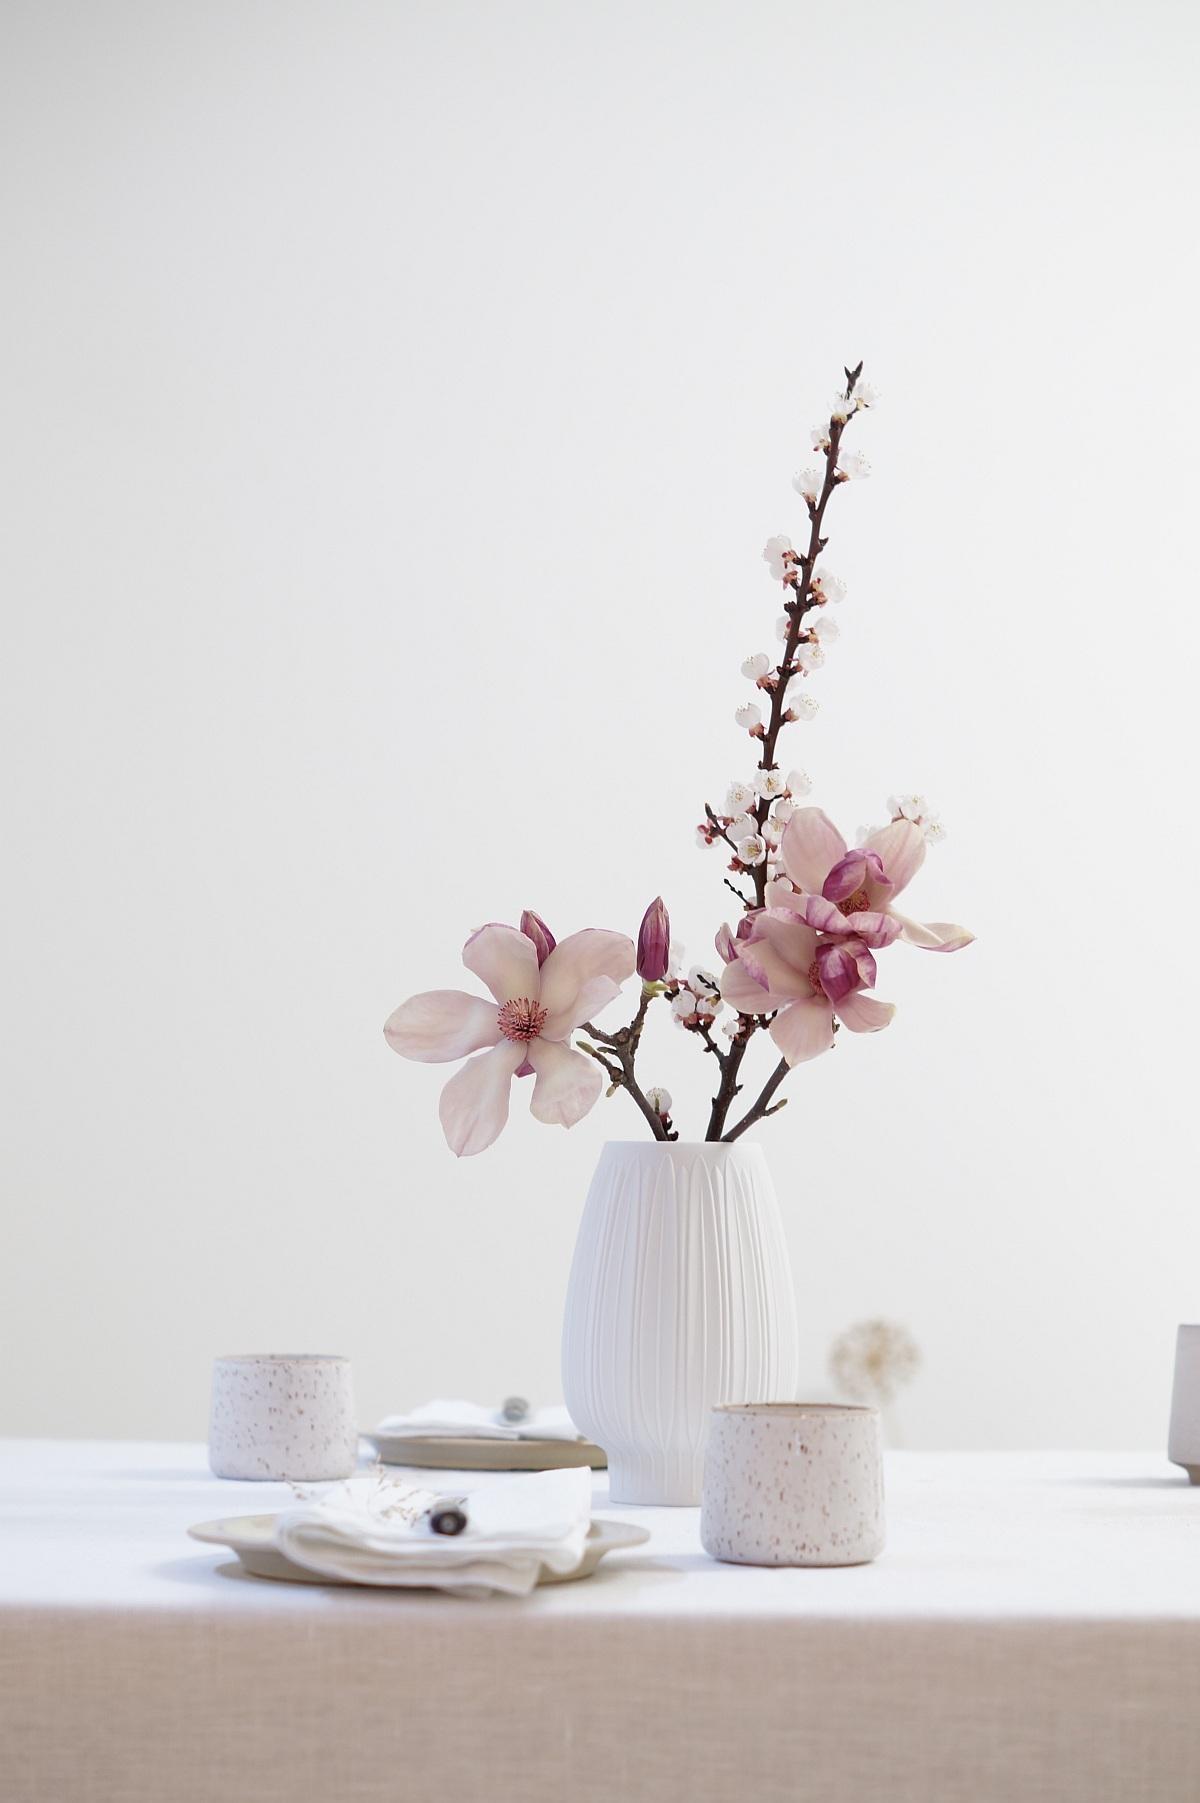 #magnolien #freshflowerfriday #livingchallenge #tablemoment #tischdekoration #frühling #vintage #keramik